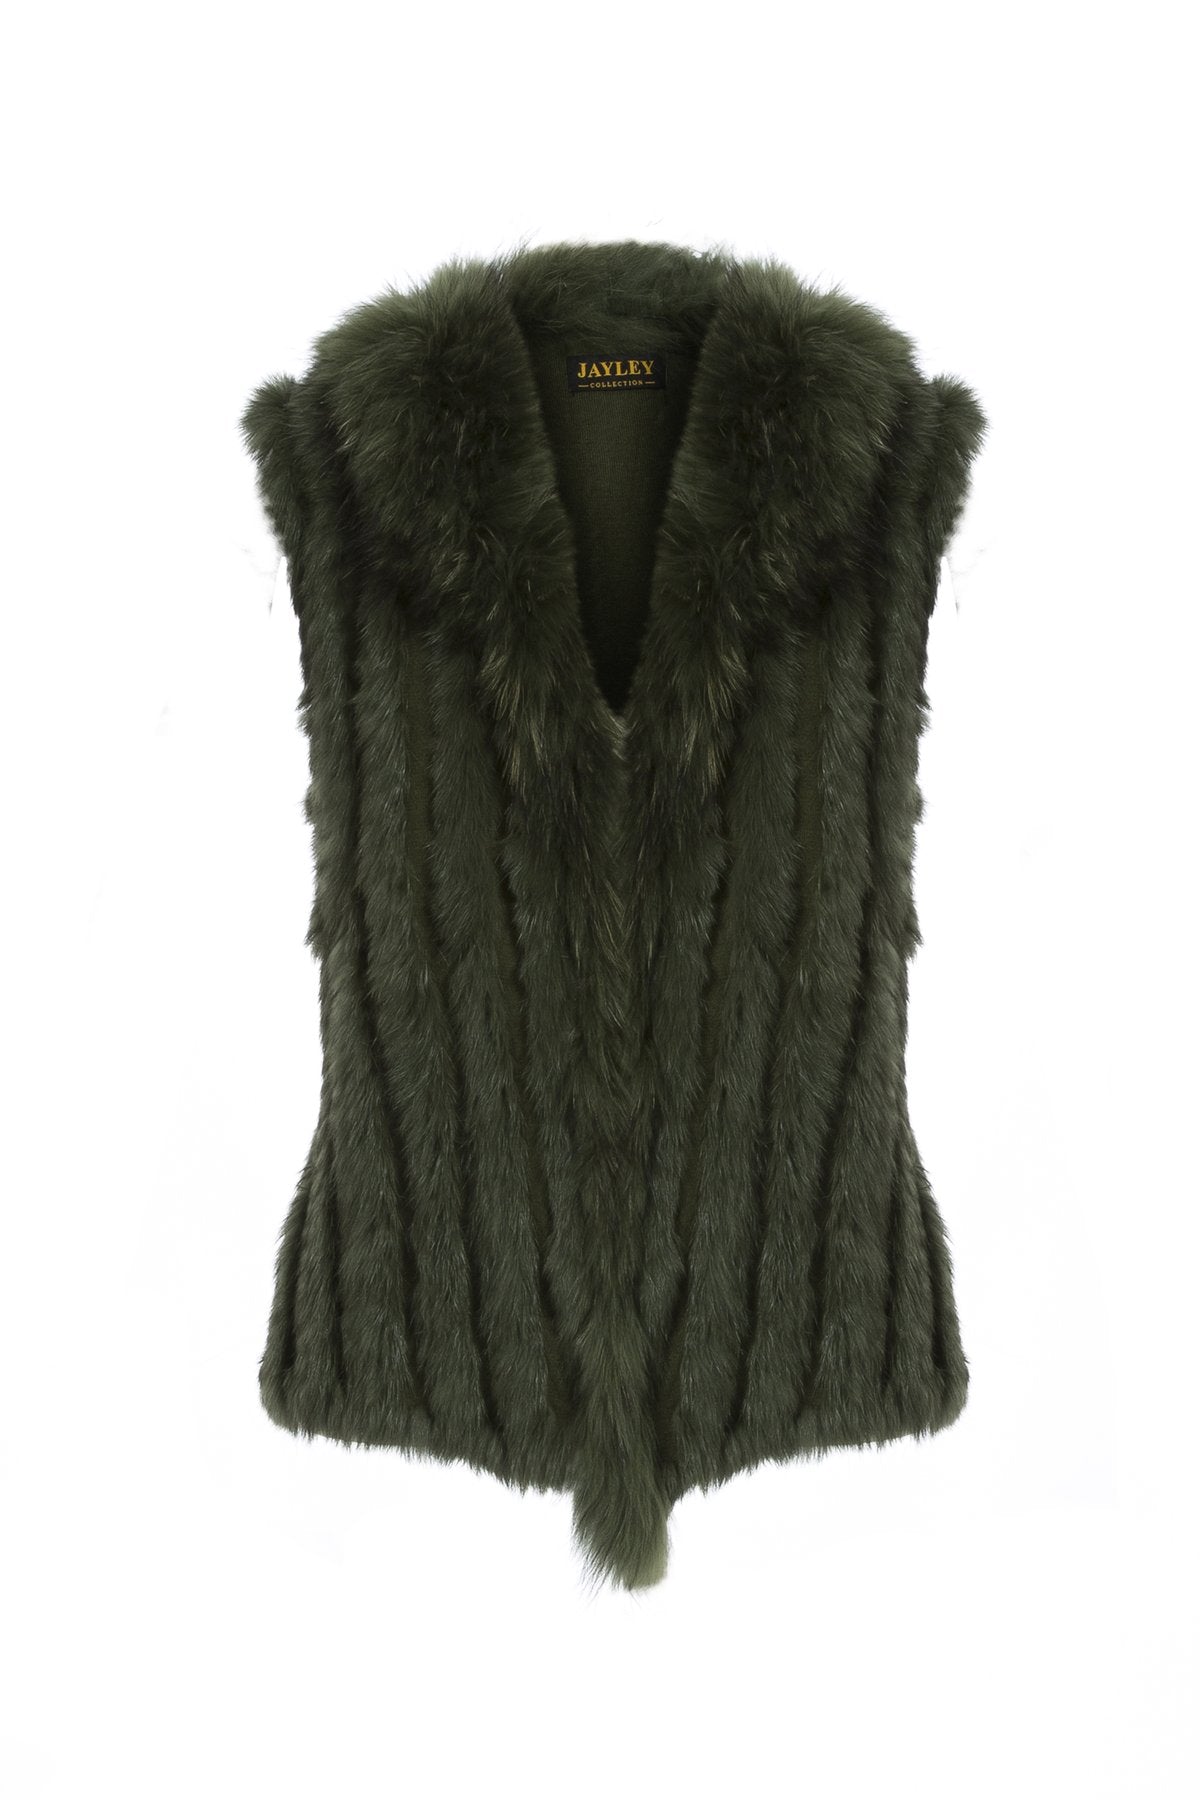 Jayley Faux Fur Gilet - Lucindas on-line